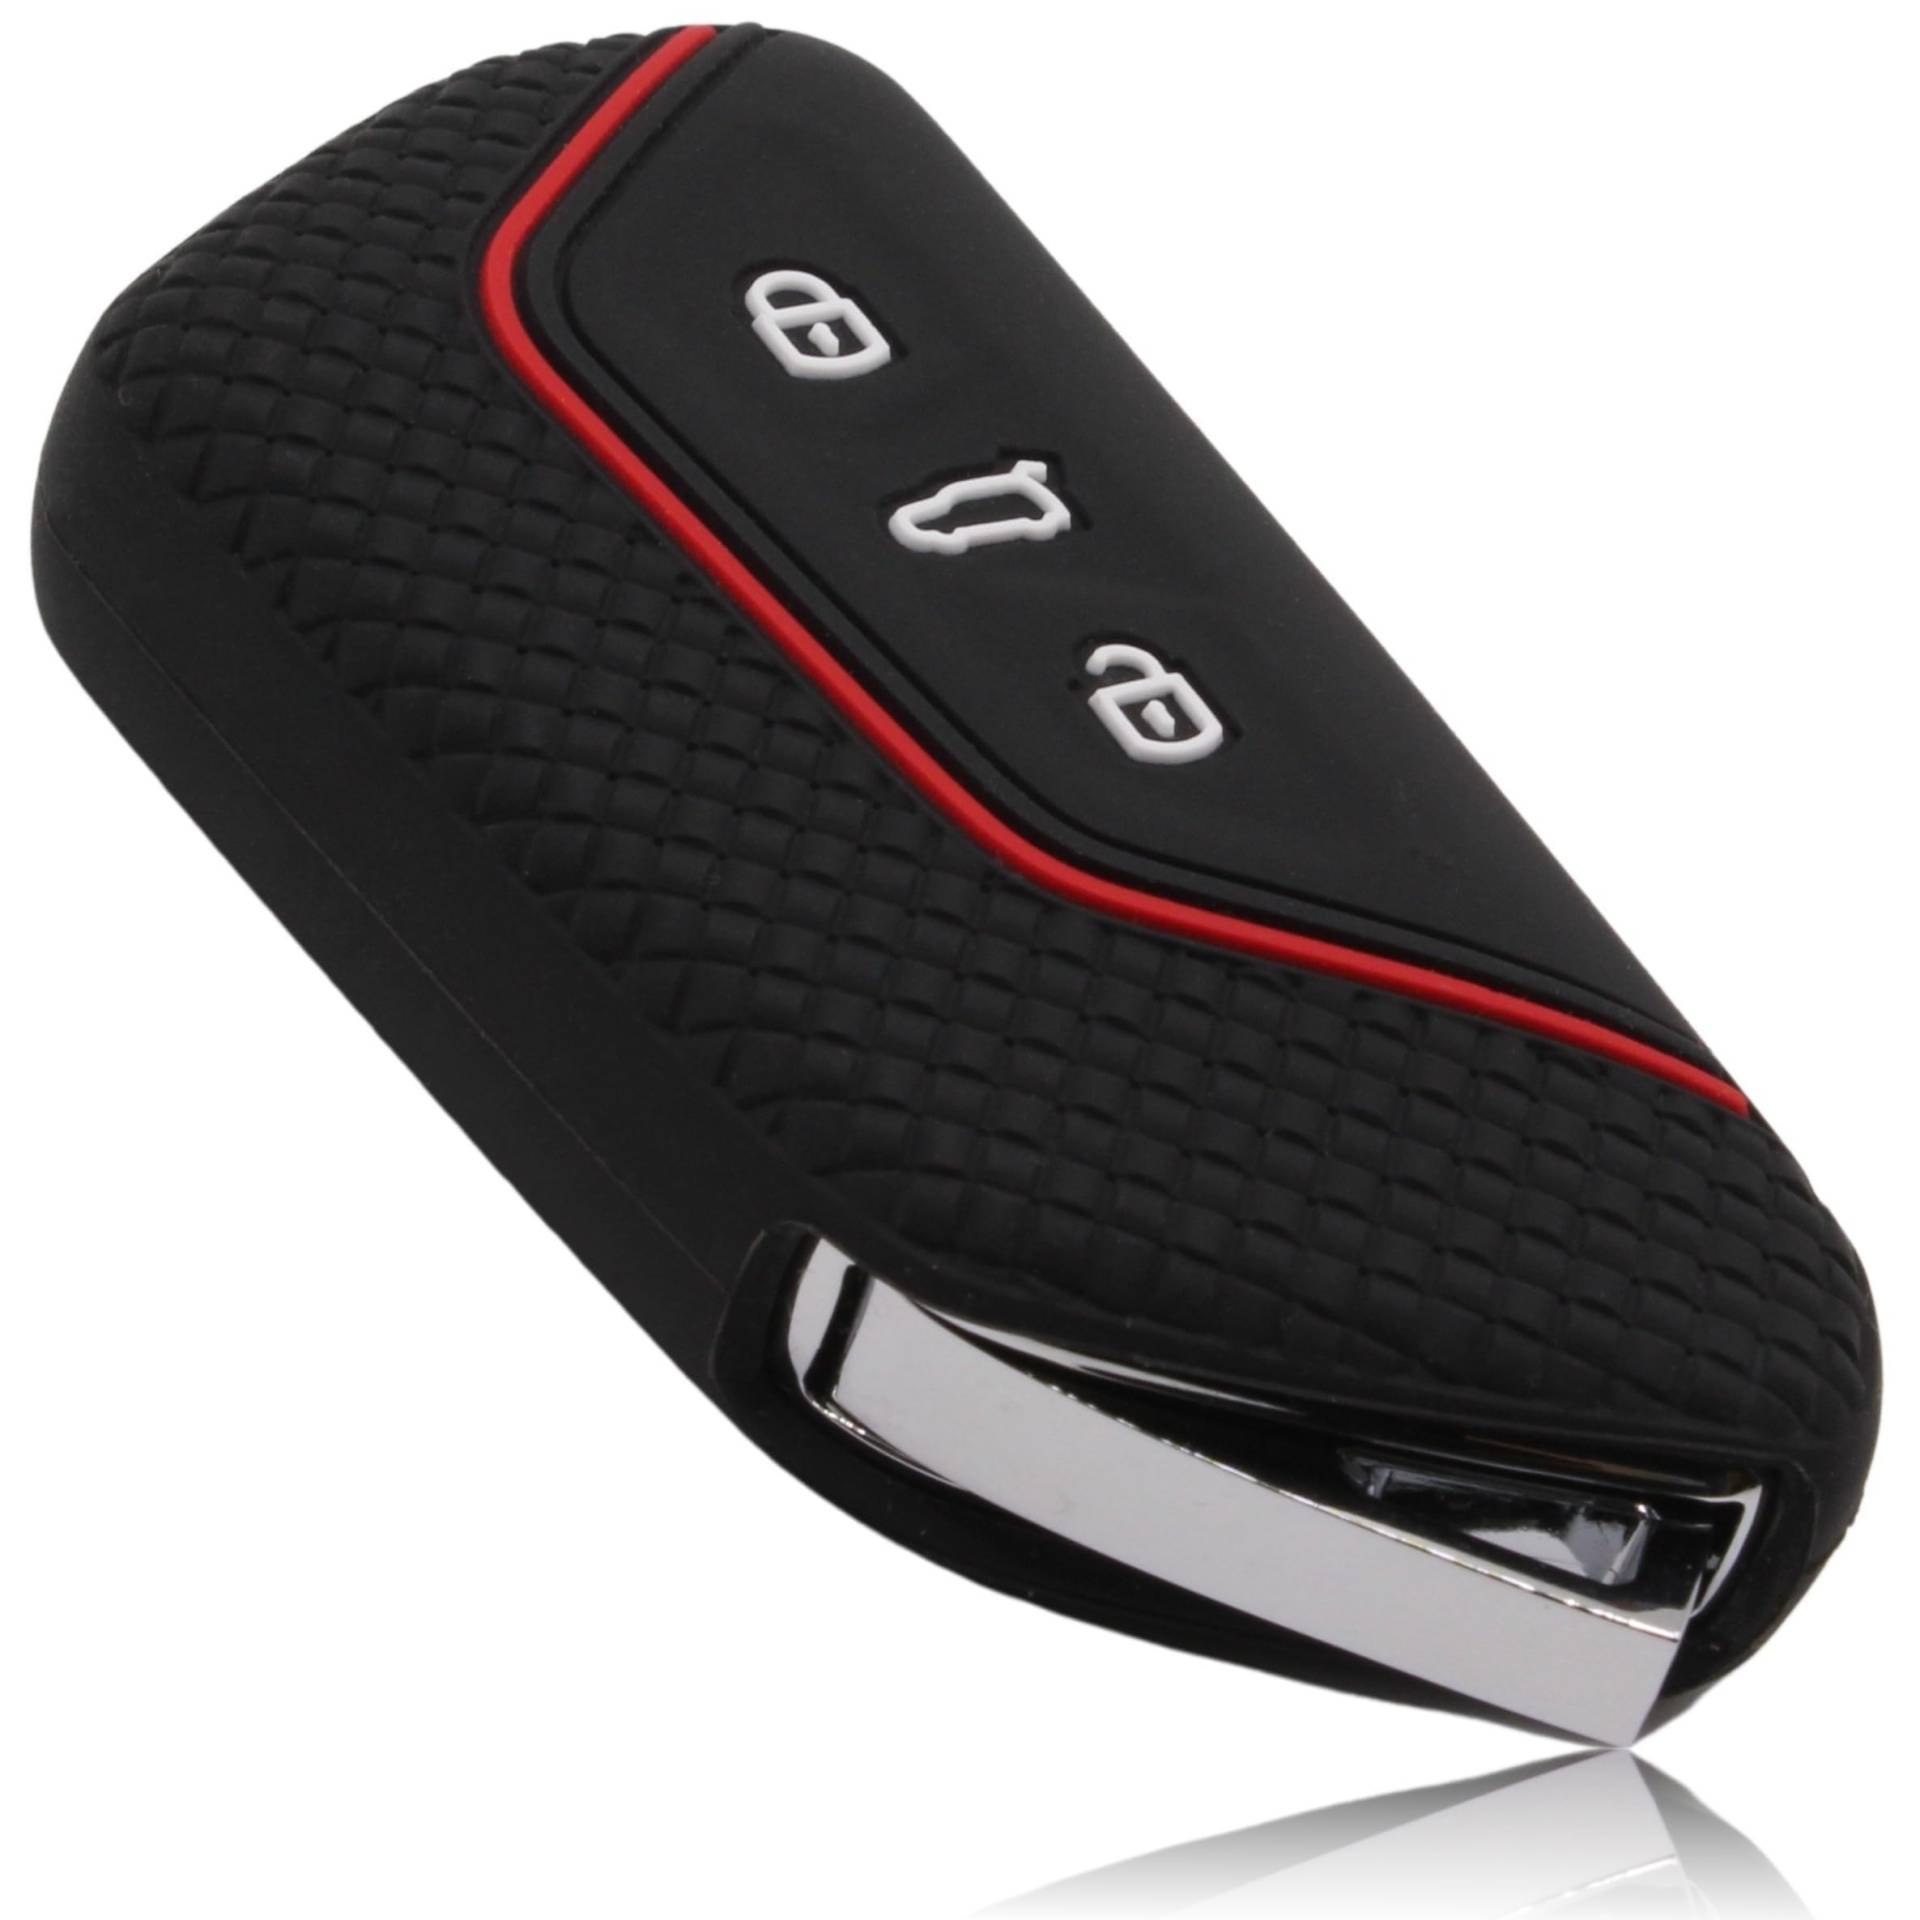 FOAMO Autoschlüssel Hülle Kompatibel mit VW, SEAT, SKODA, CUPRA Autoschlüssel - Silikon Schlüsselhülle - Schlüsselhülle - Schutz für Autoschlüssel in Schwarz-Rot von FOAMO